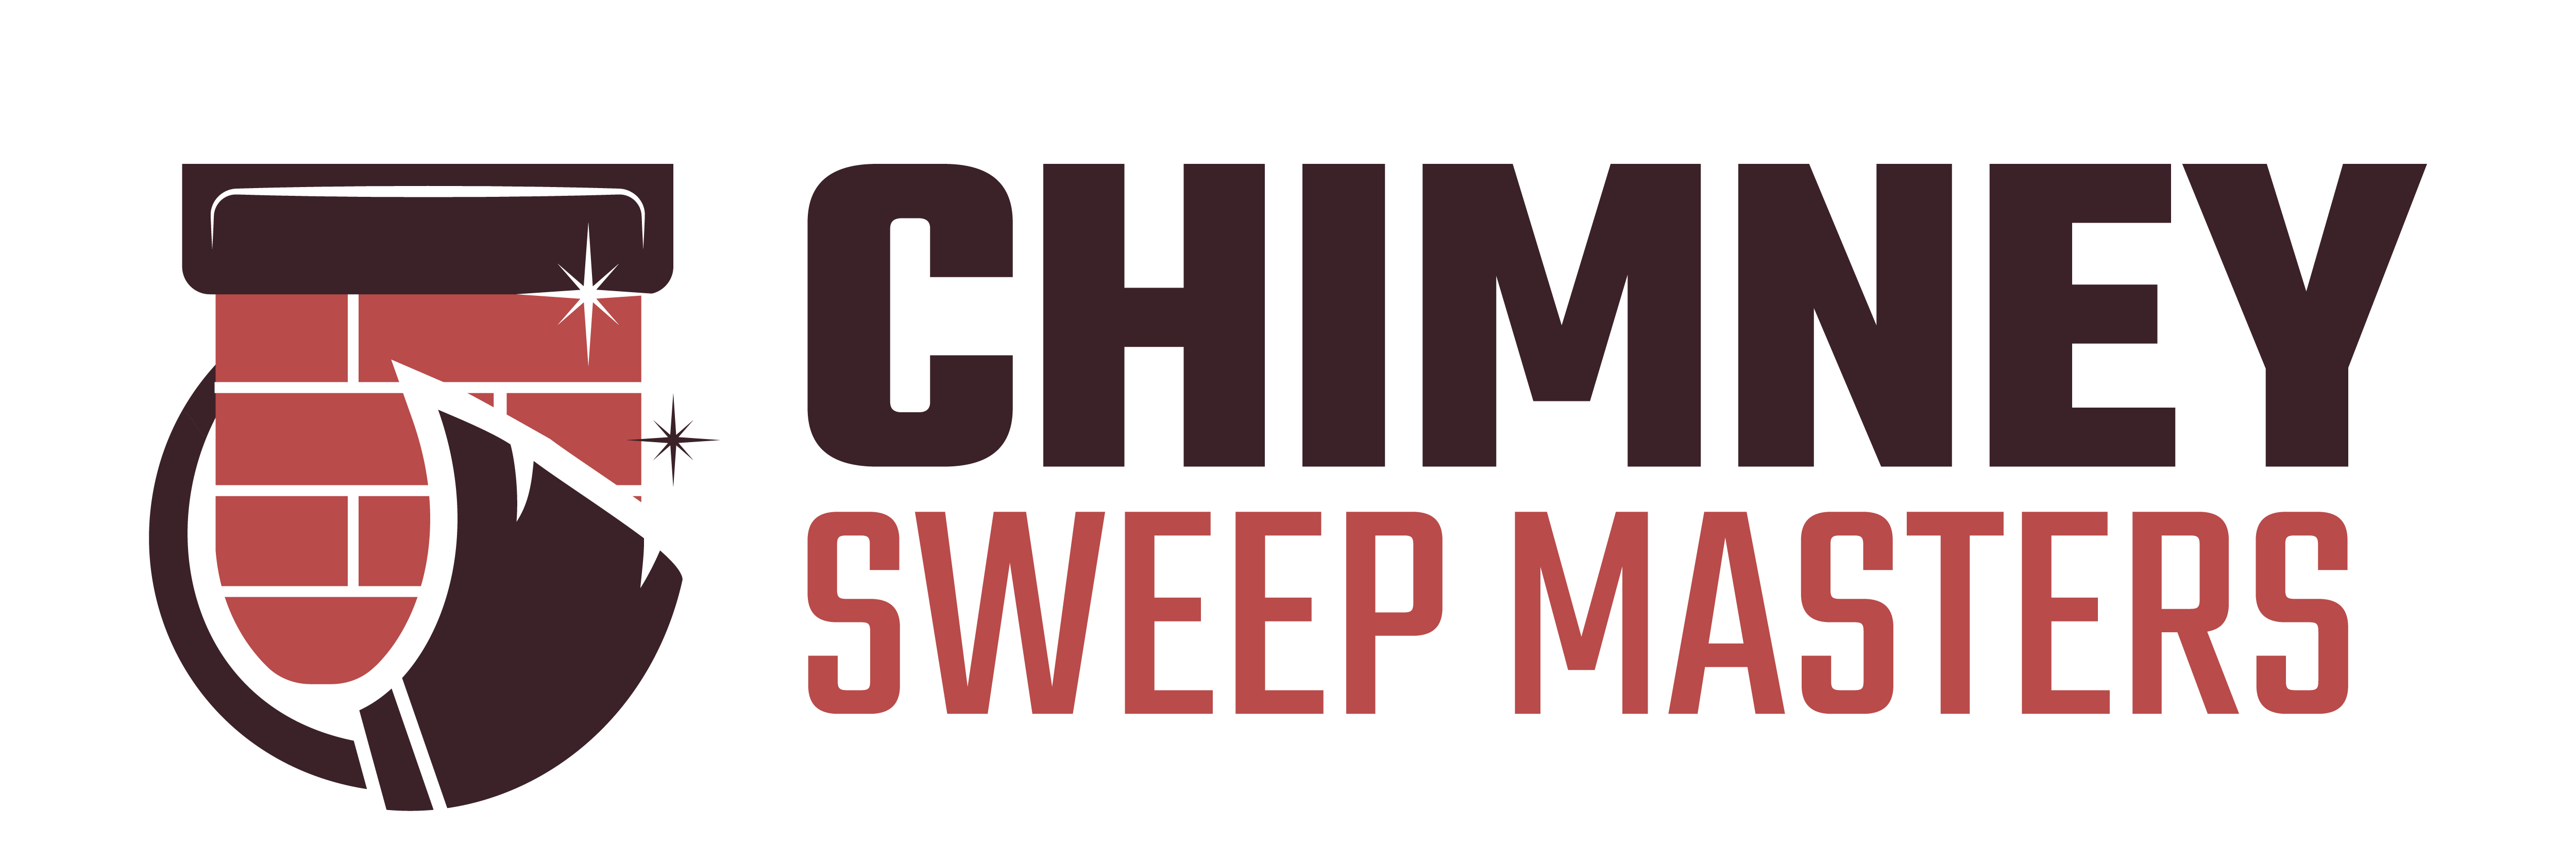 Chimney Sweep Masters Topanga Logo